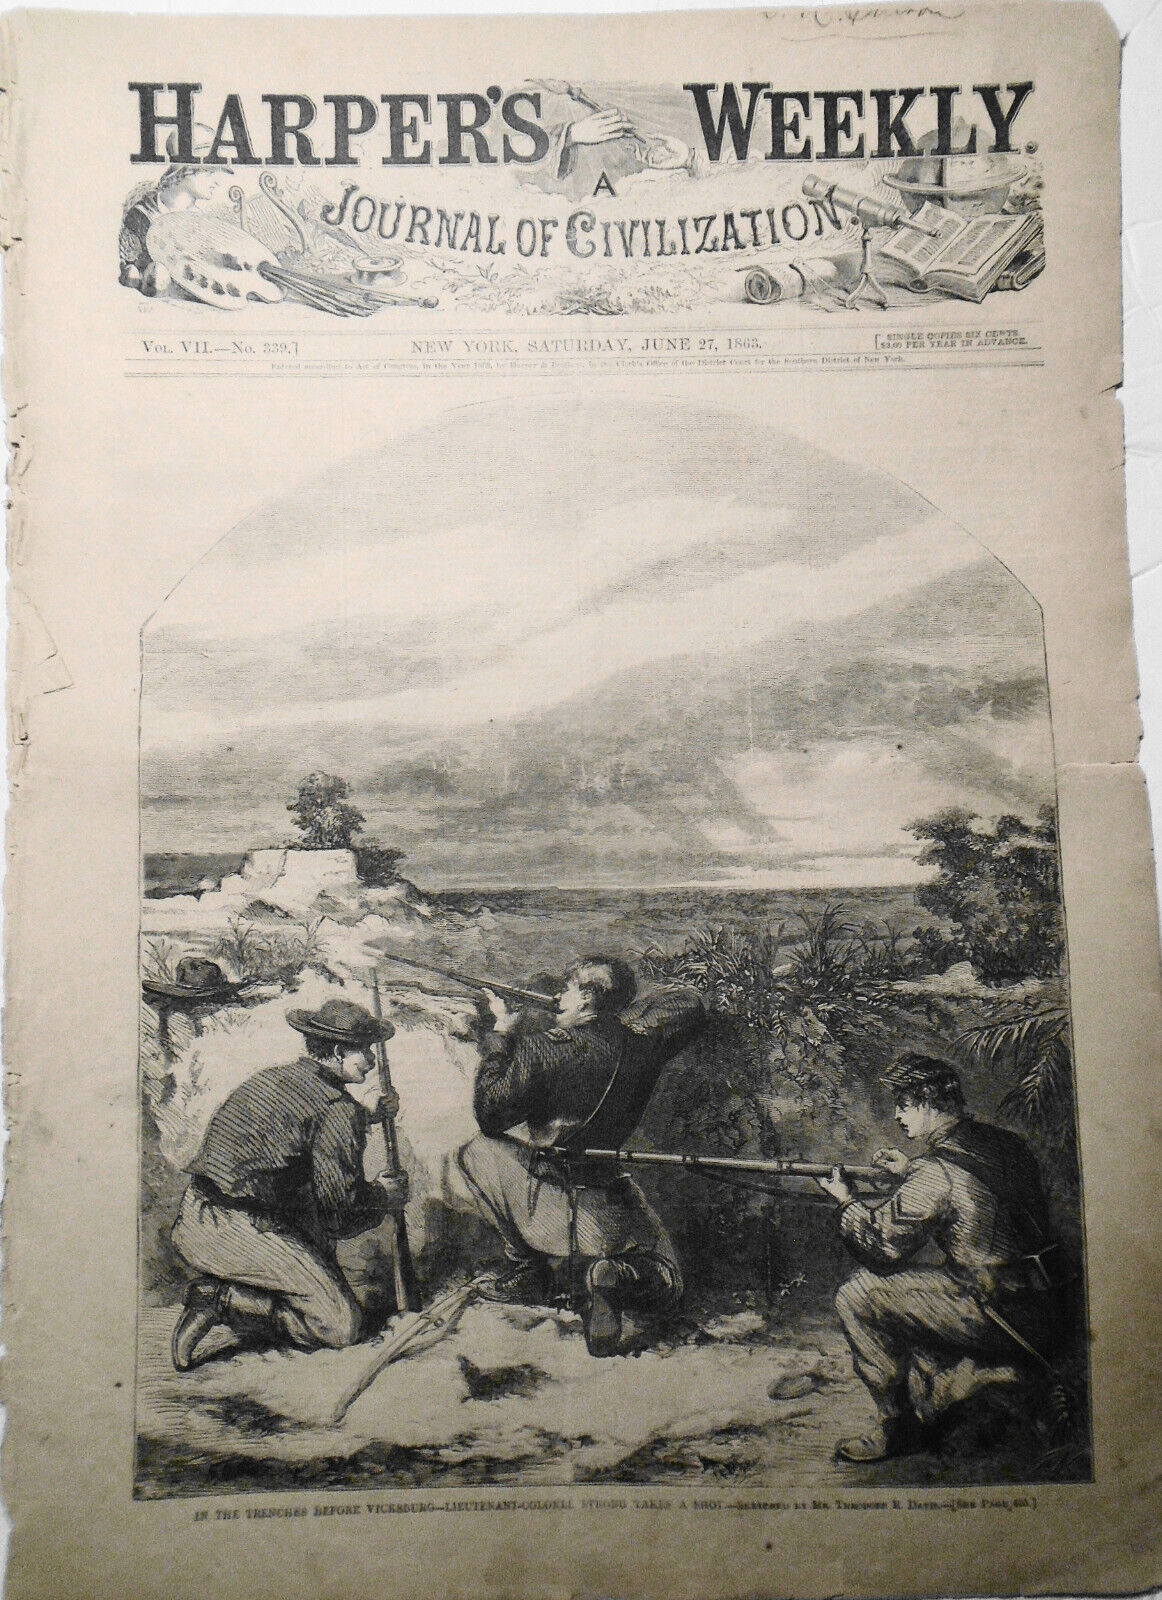 Harper's Weekly June 27, 1863. Civil War, Vicksburg; Map: Theatre of Operations